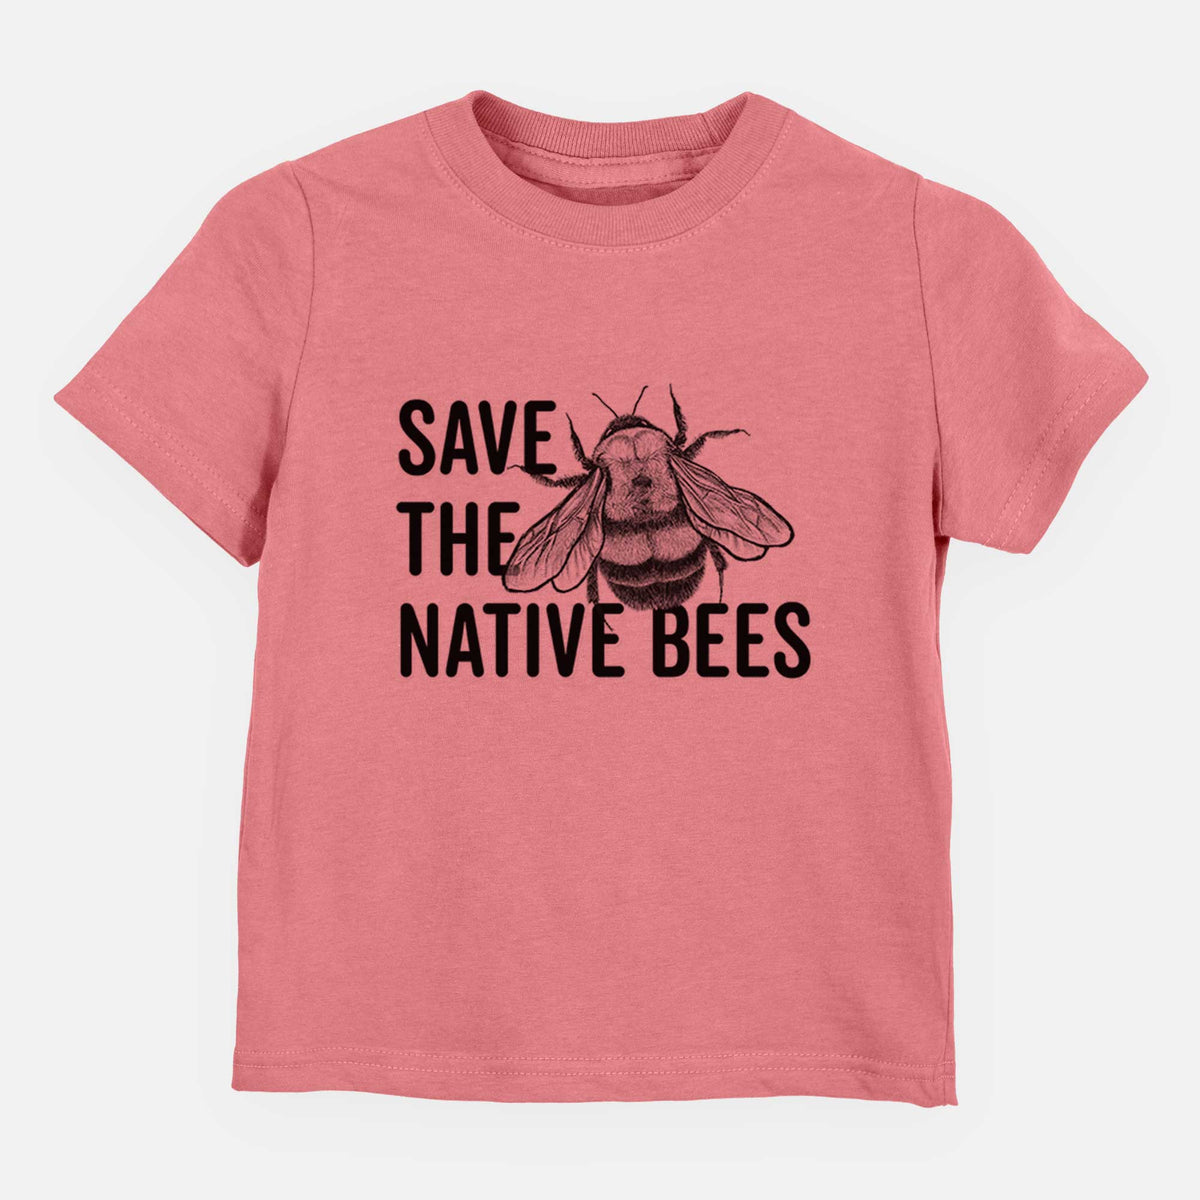 Save the Native Bees - Kids Shirt